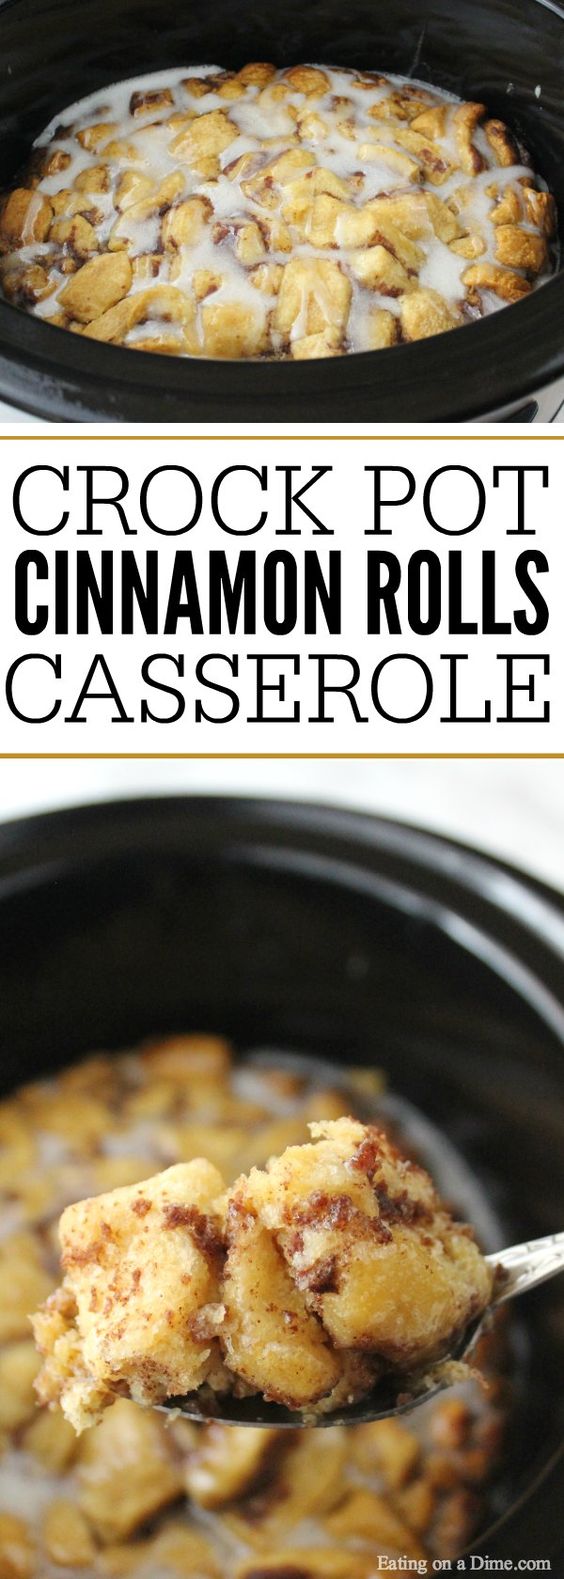 Crock pot Cinnamon Roll Casserole